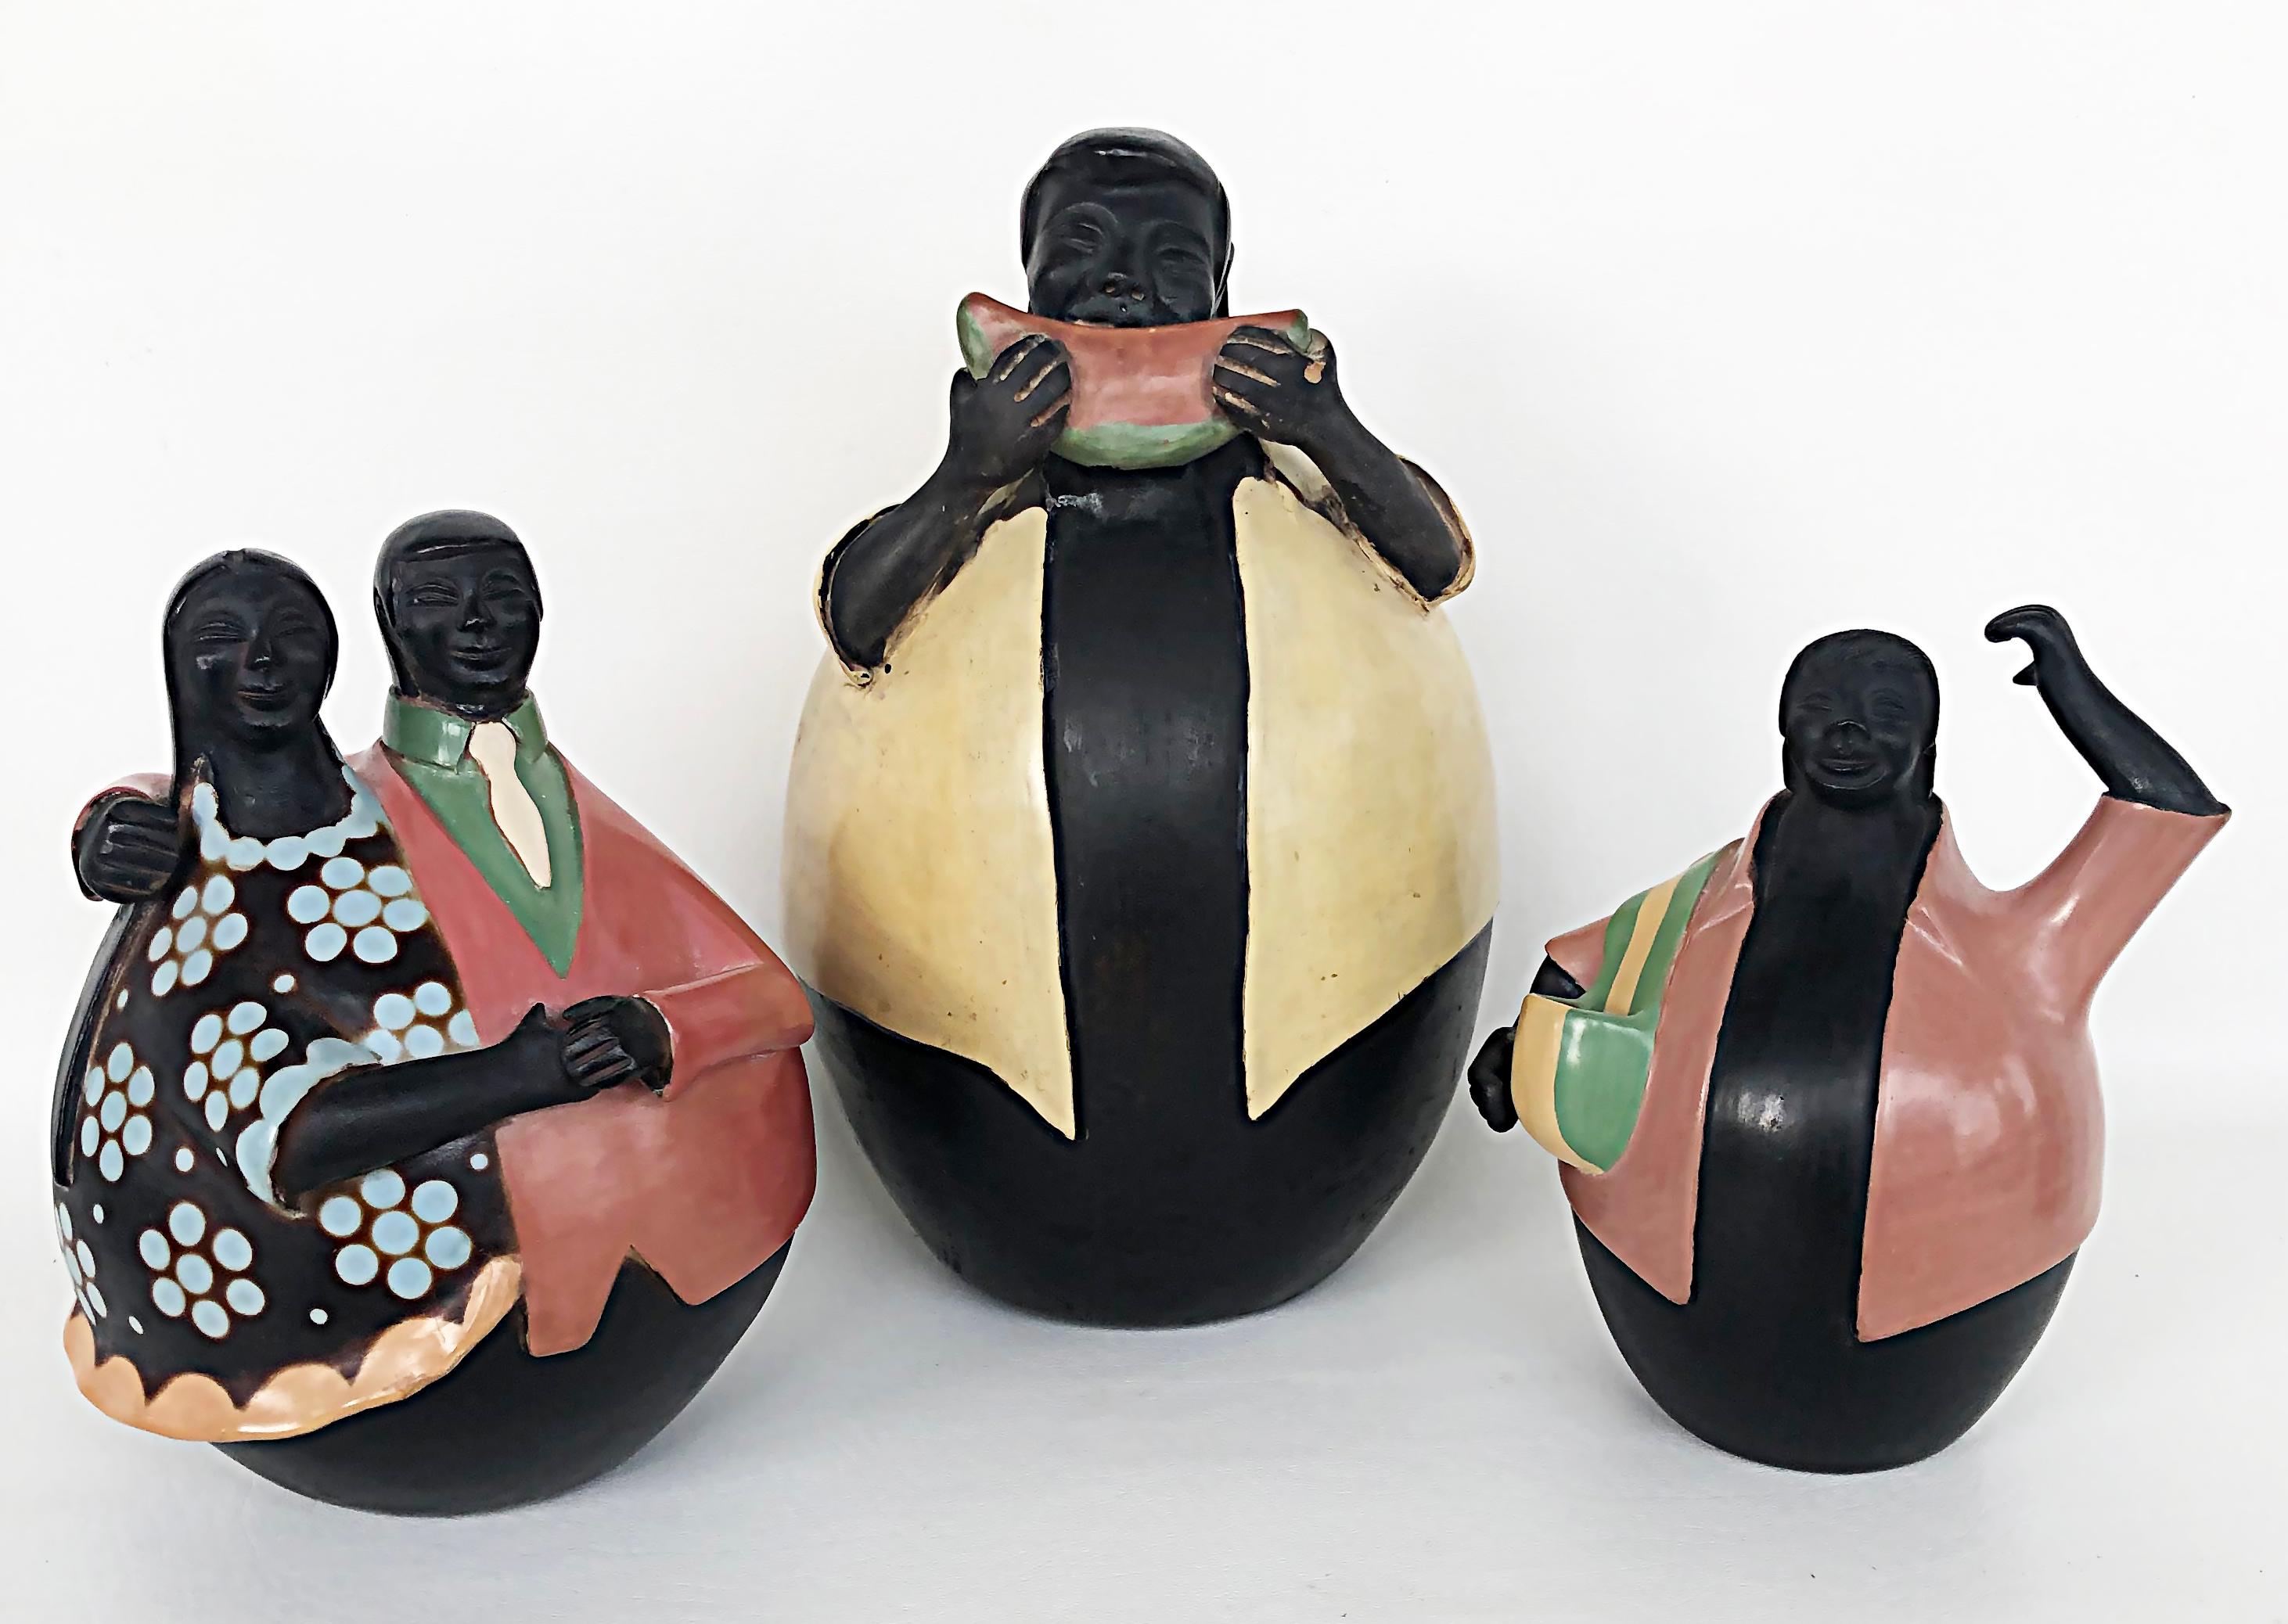 Manuel Sandoval Valez Latin American Figurative Ceramic Sculpture of a Newsboy For Sale 4